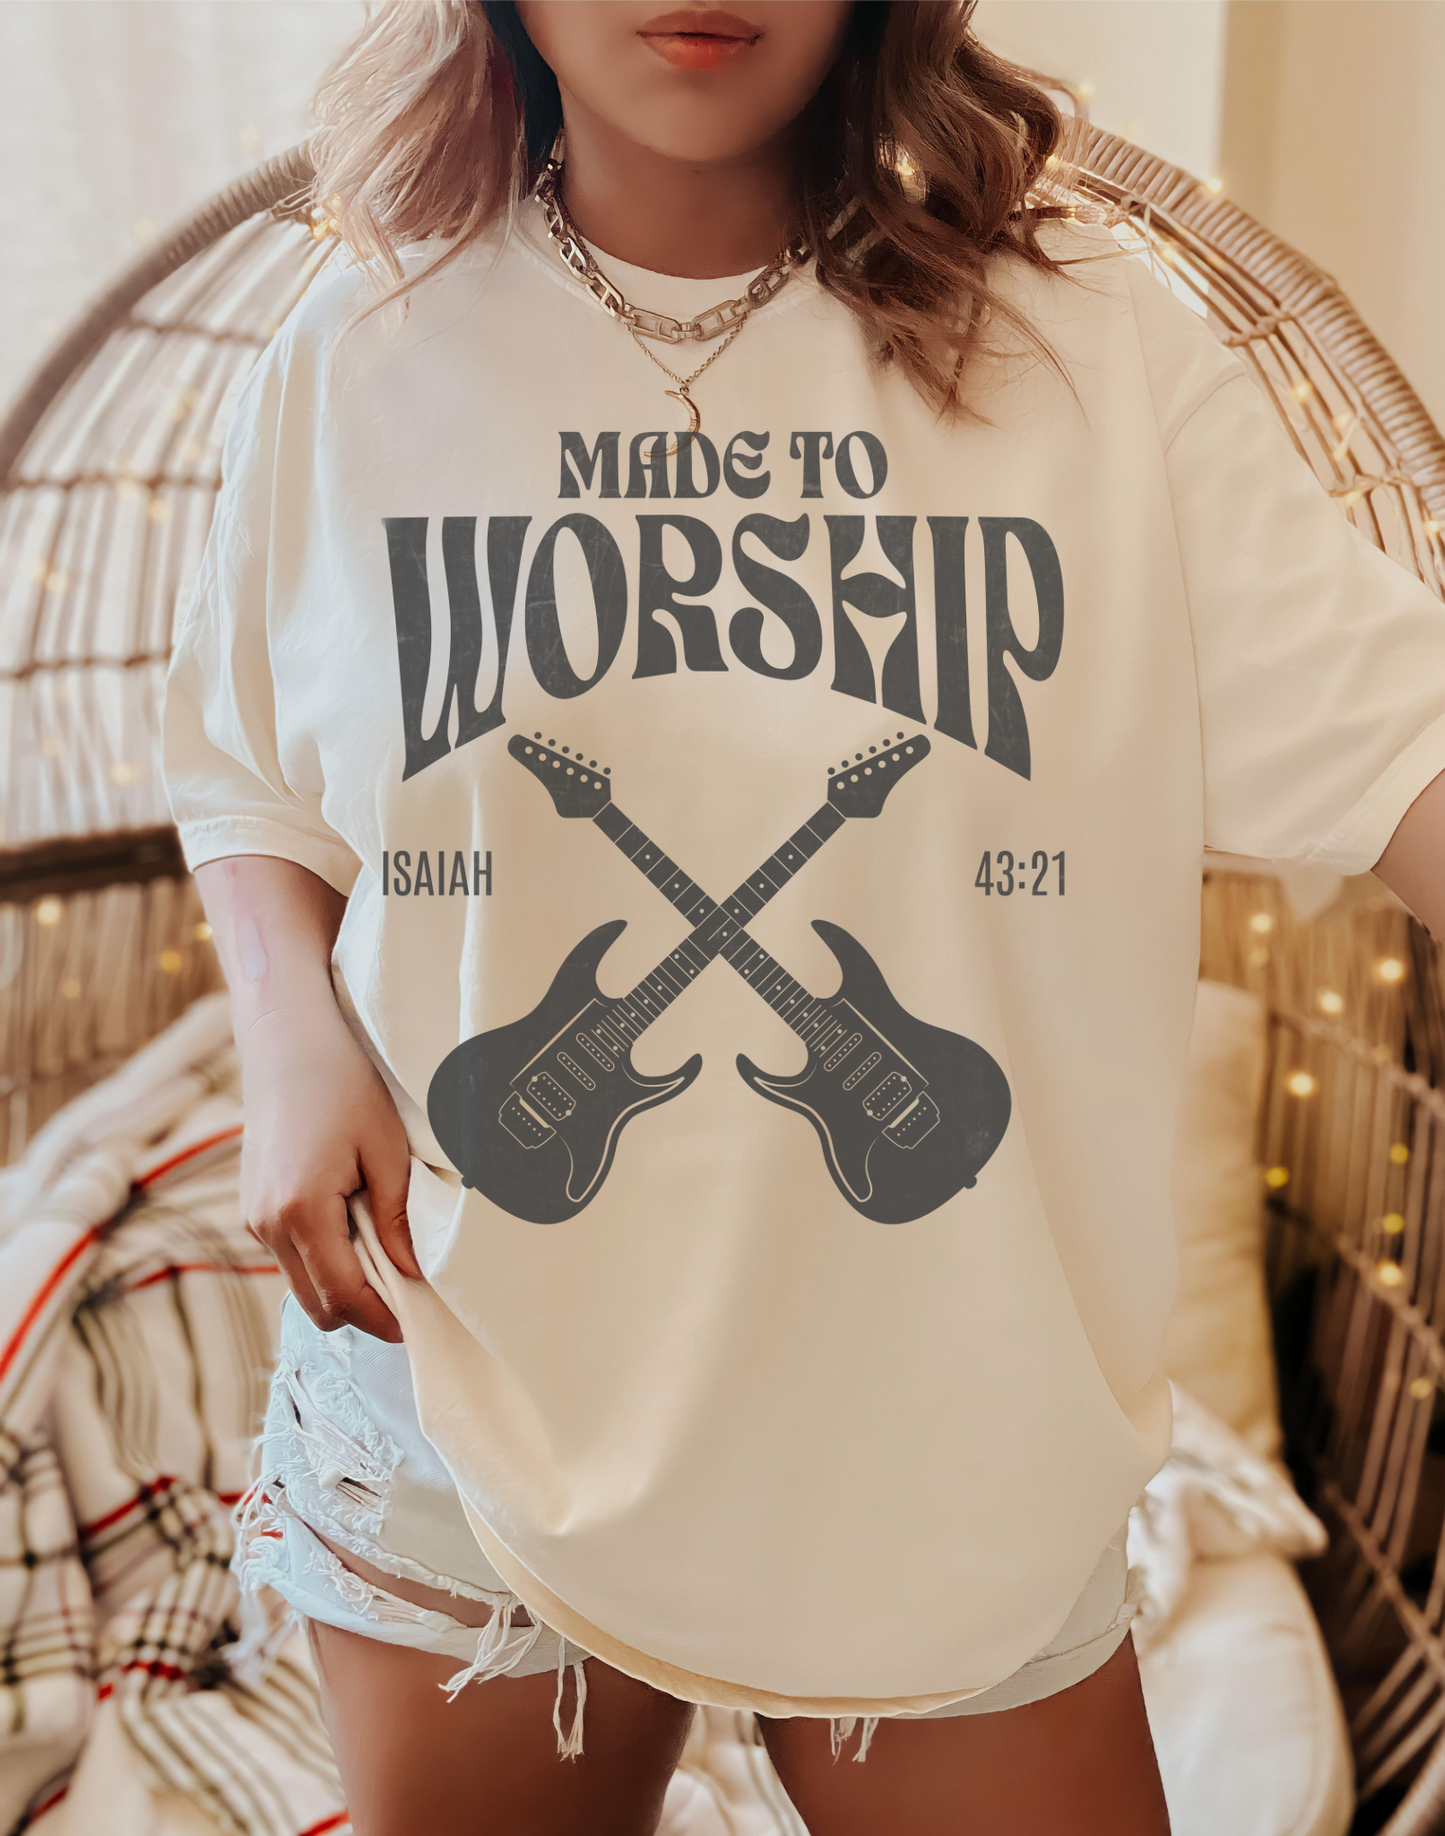 Made To Worship Christian Merch Comfort Colors Praise Team Worship Leader Gift, Christian Music Tee Isaiah 43:21 Unisex Garment-Dyed T-shirt